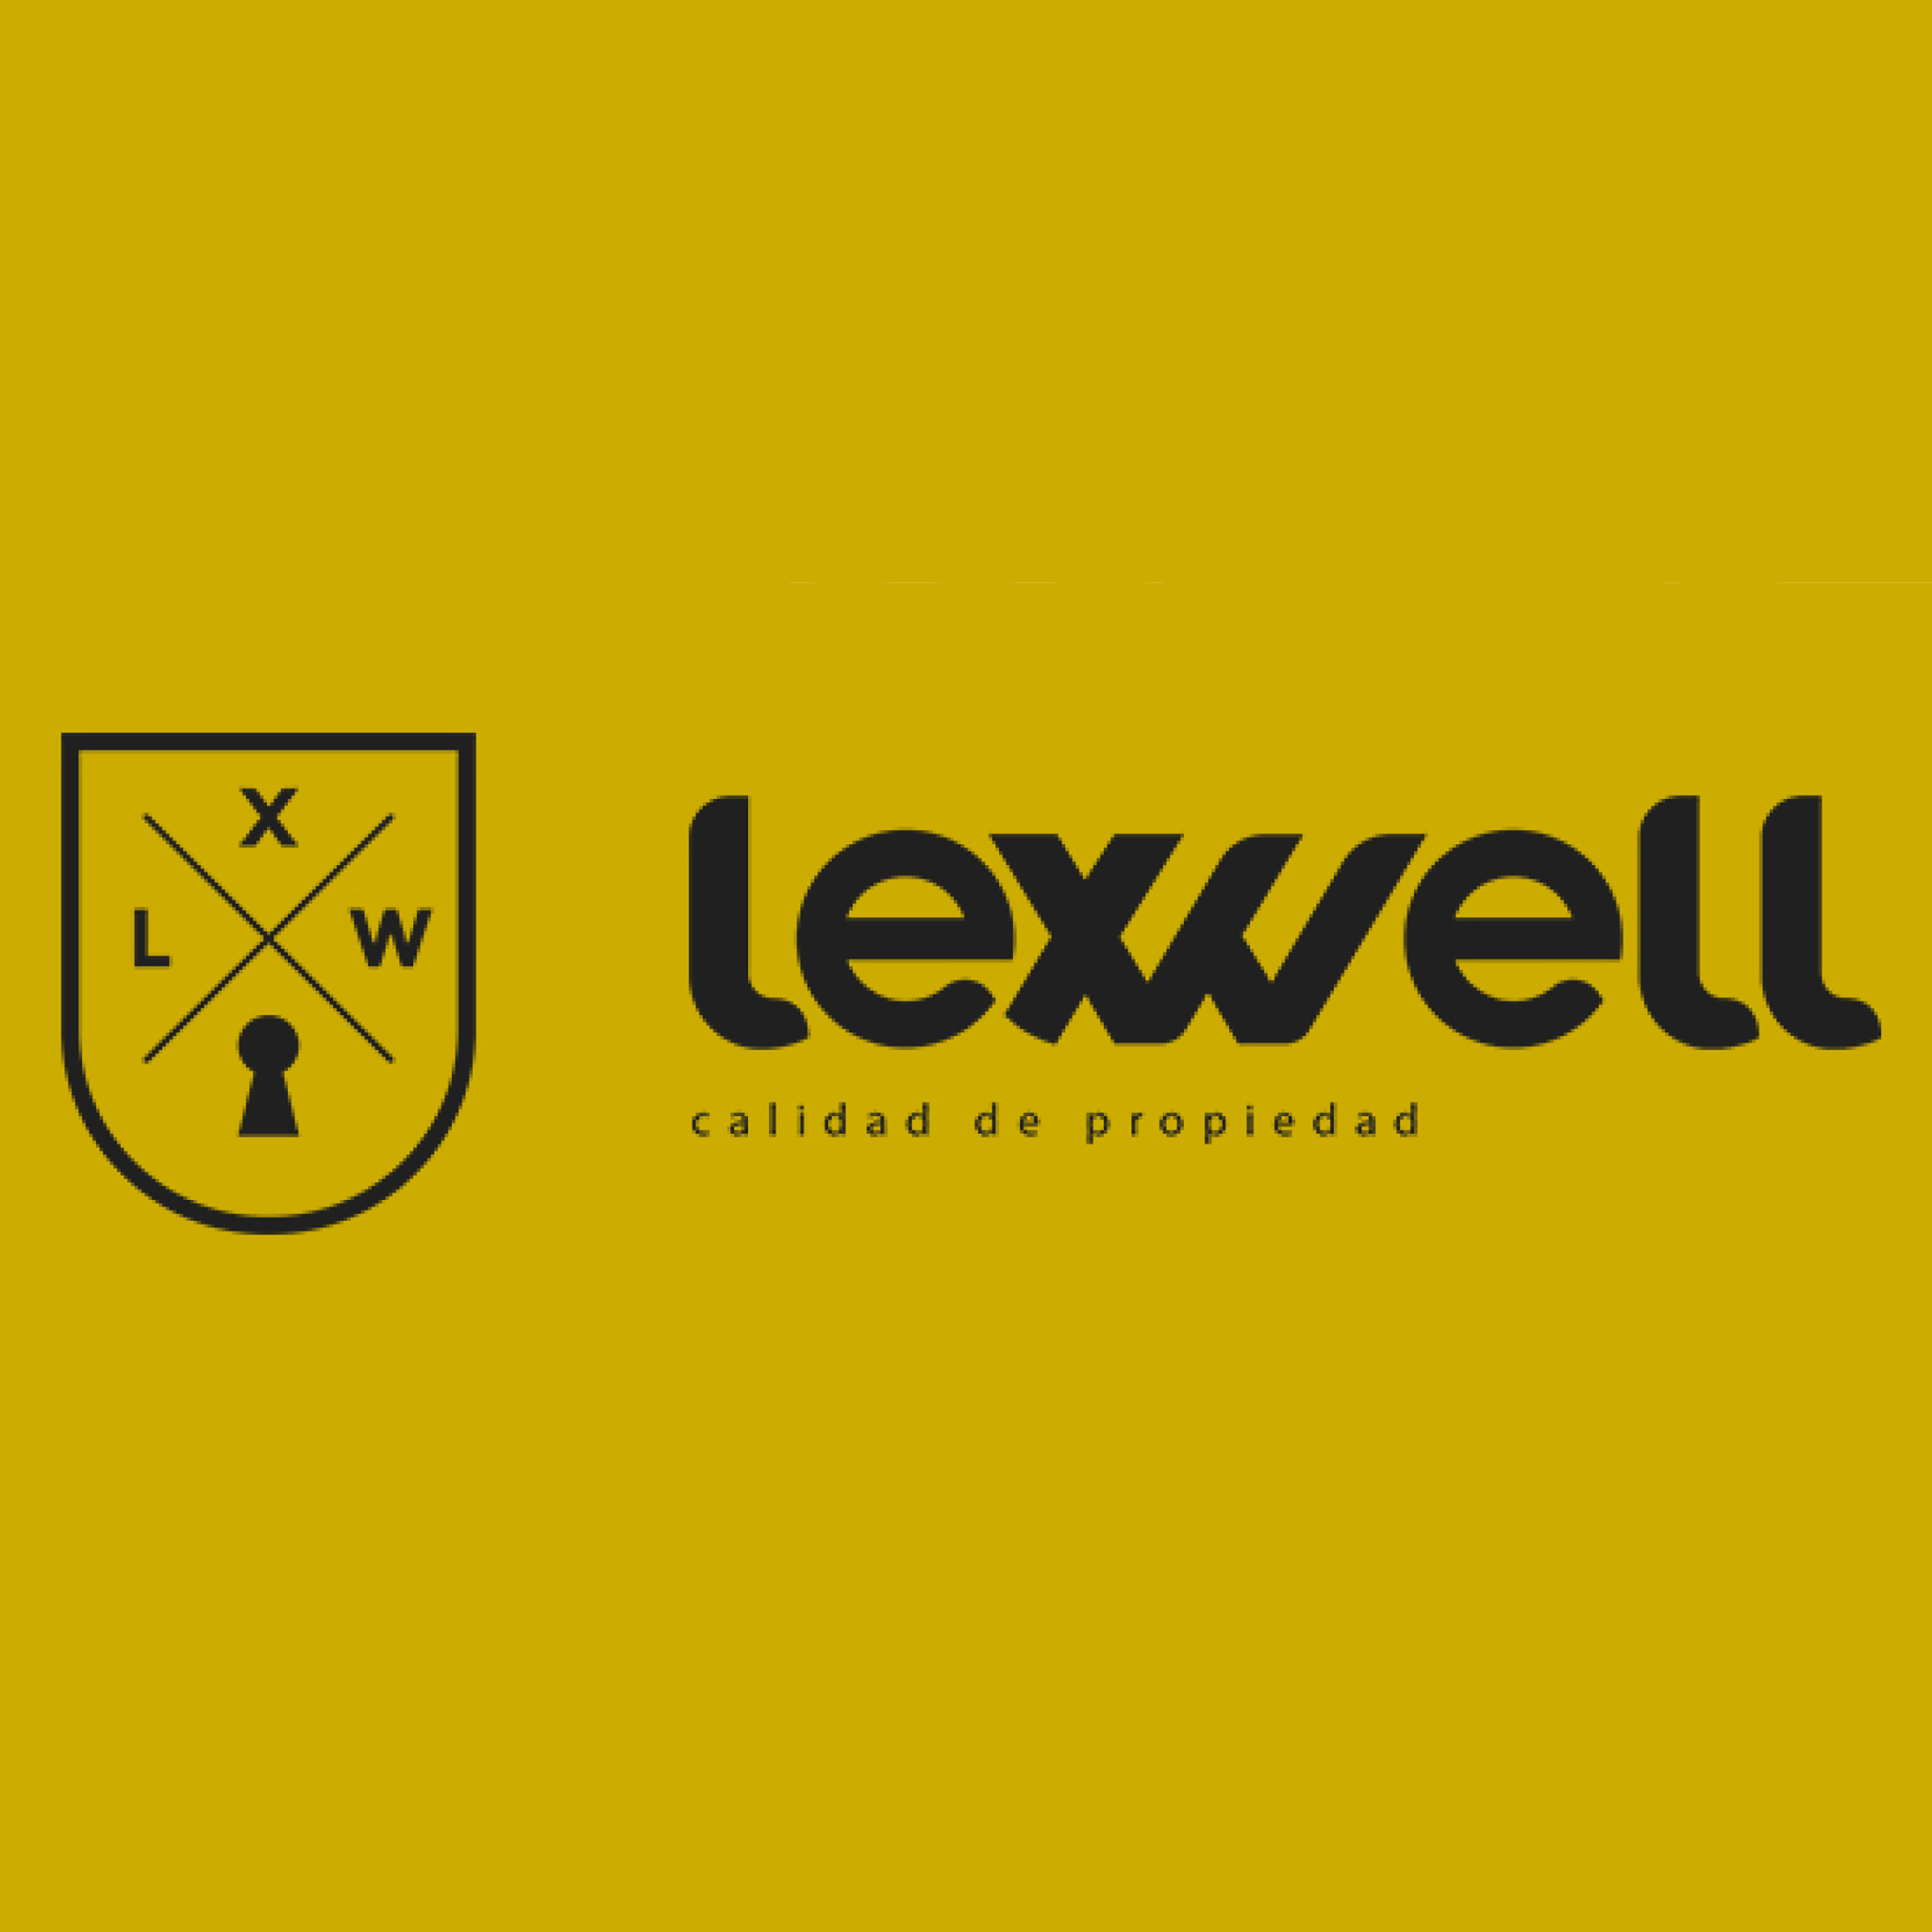 Lexwell